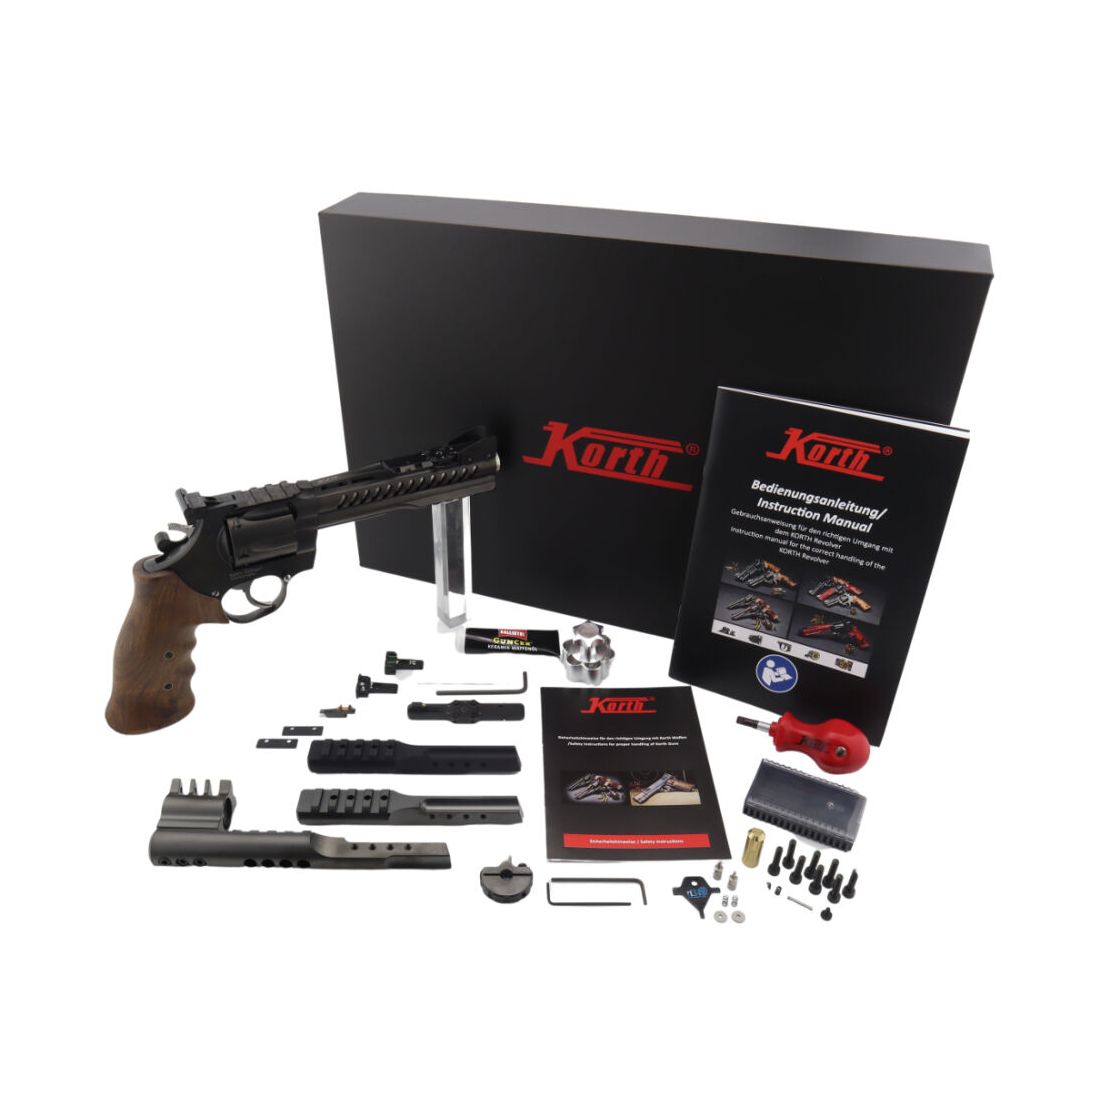 KORTH	 Super Sport GTS inkl. Performance Kit 6" Revolver | Sportrevolver | Made in Germany | Finanzierung möglich!